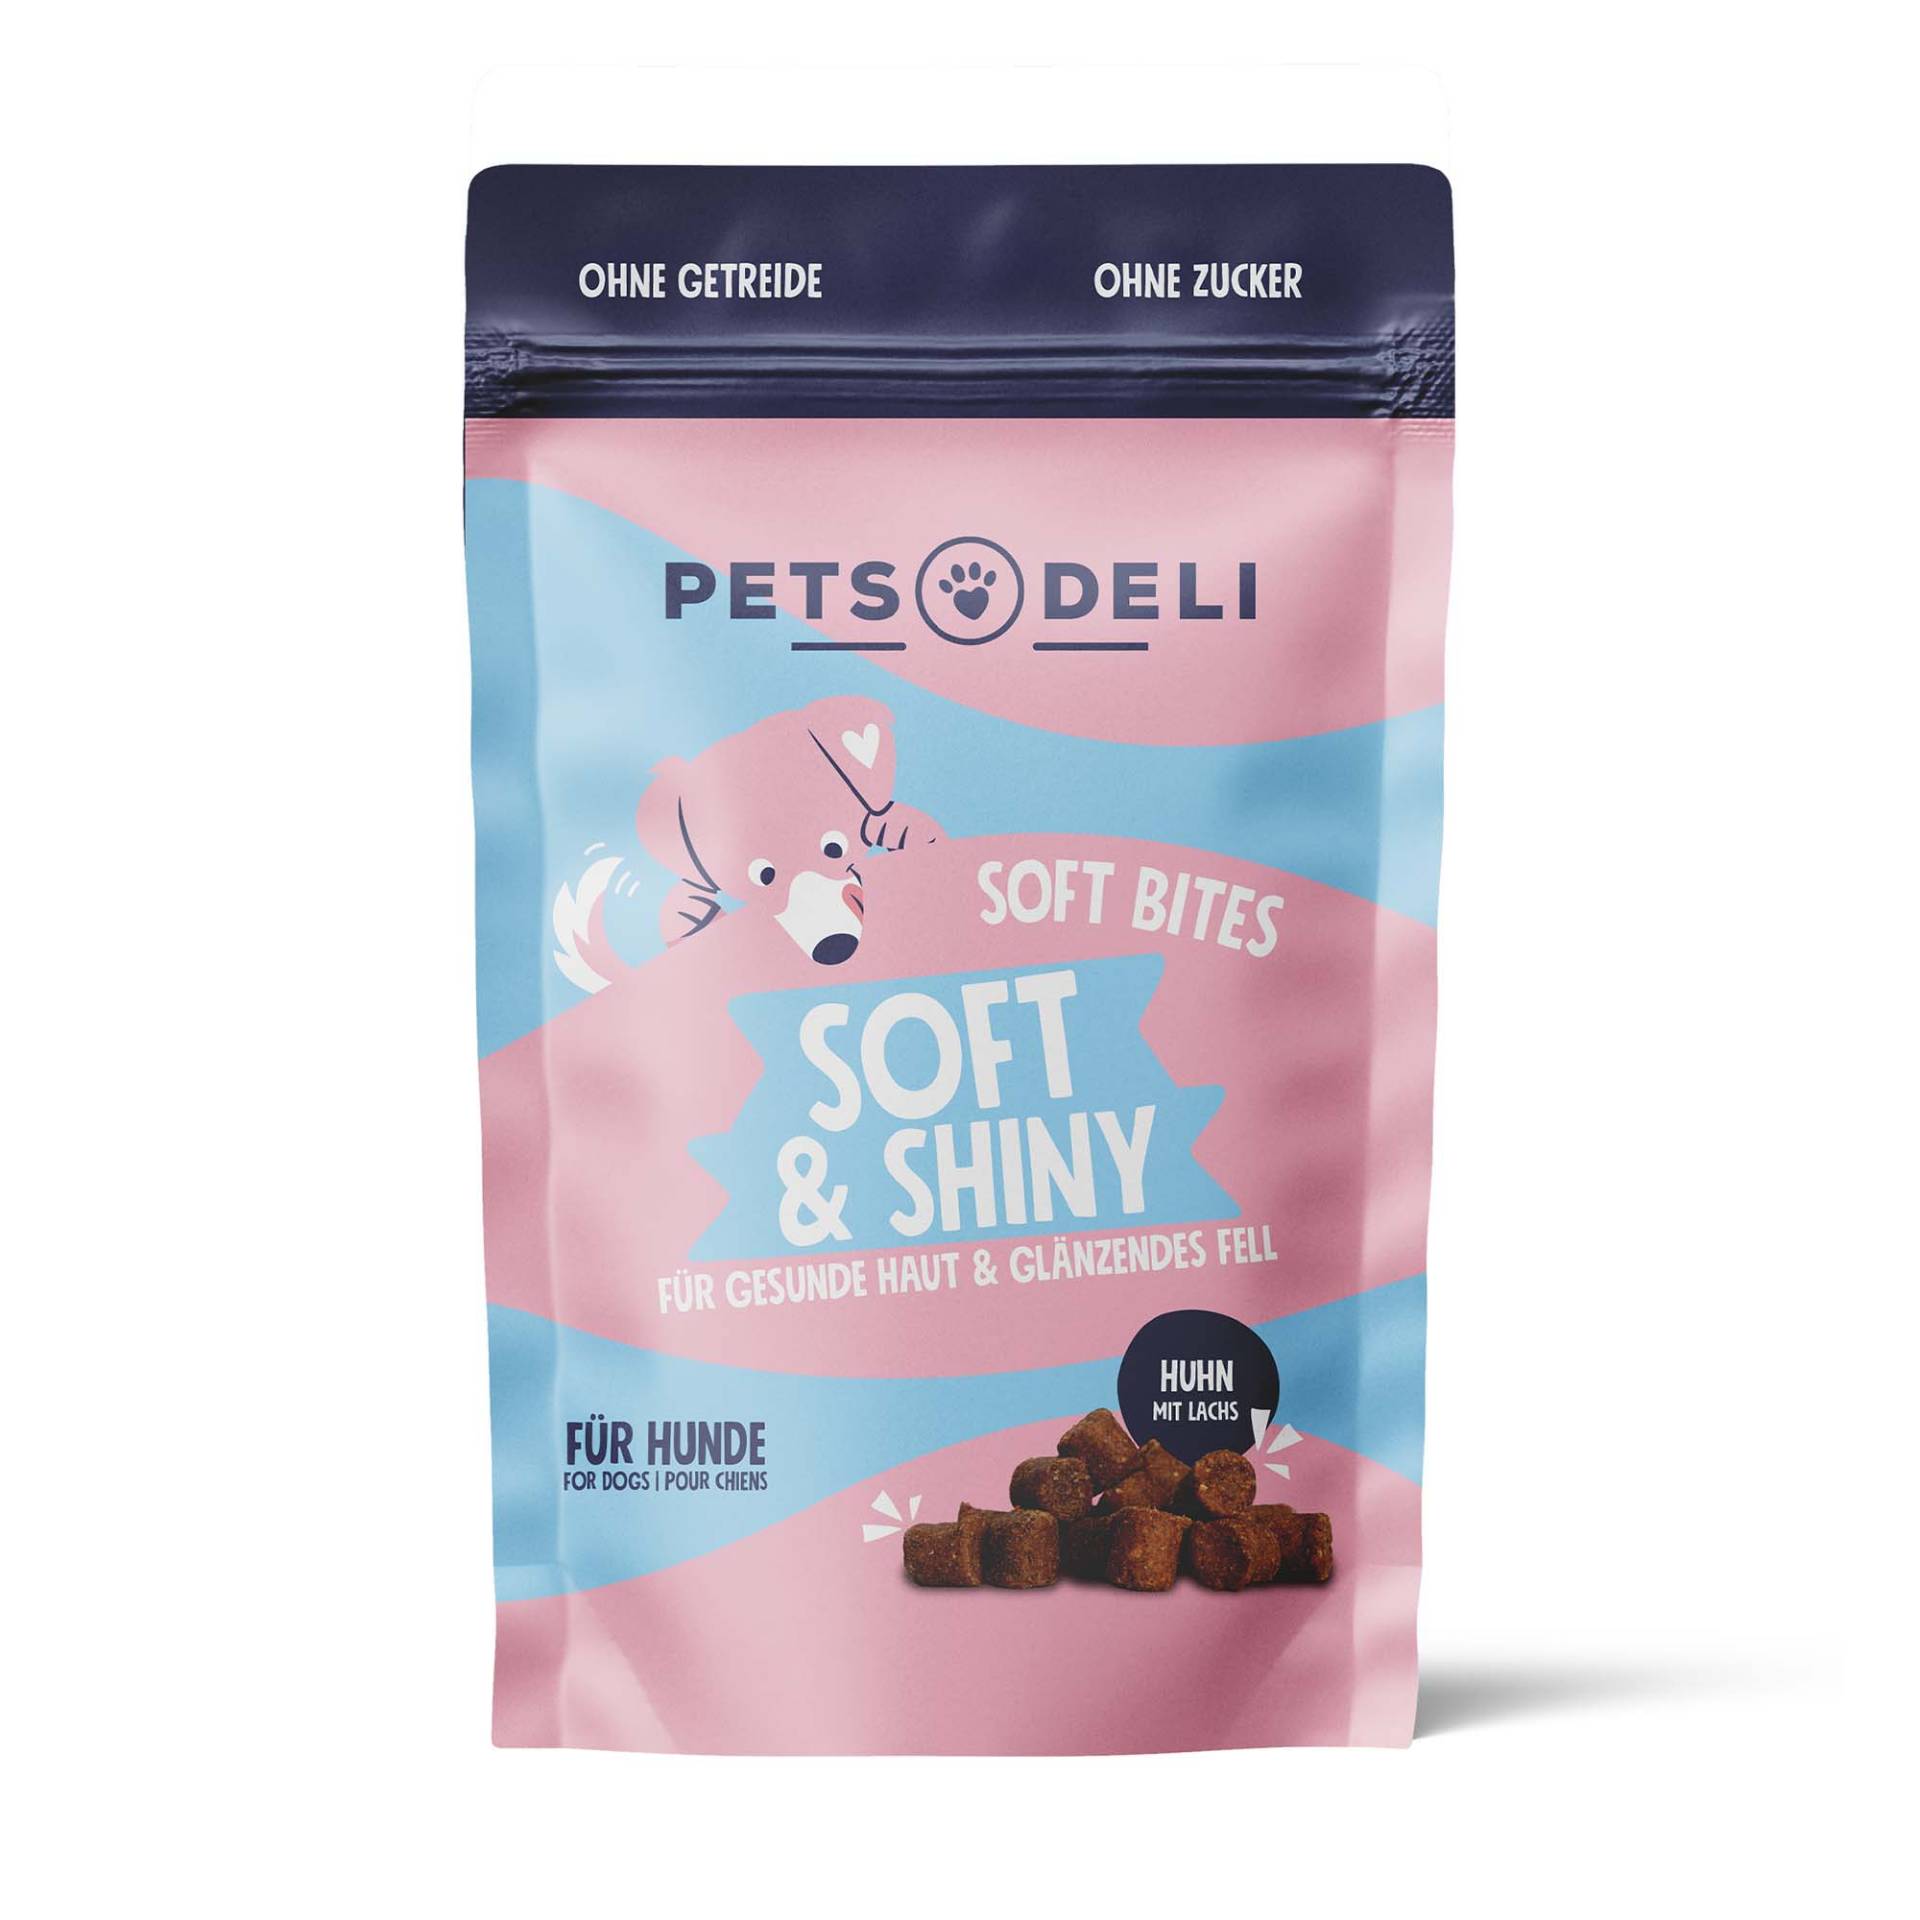 Snack Soft Bites Soft & Shiny für Hunde - 3x300g von Pets Deli